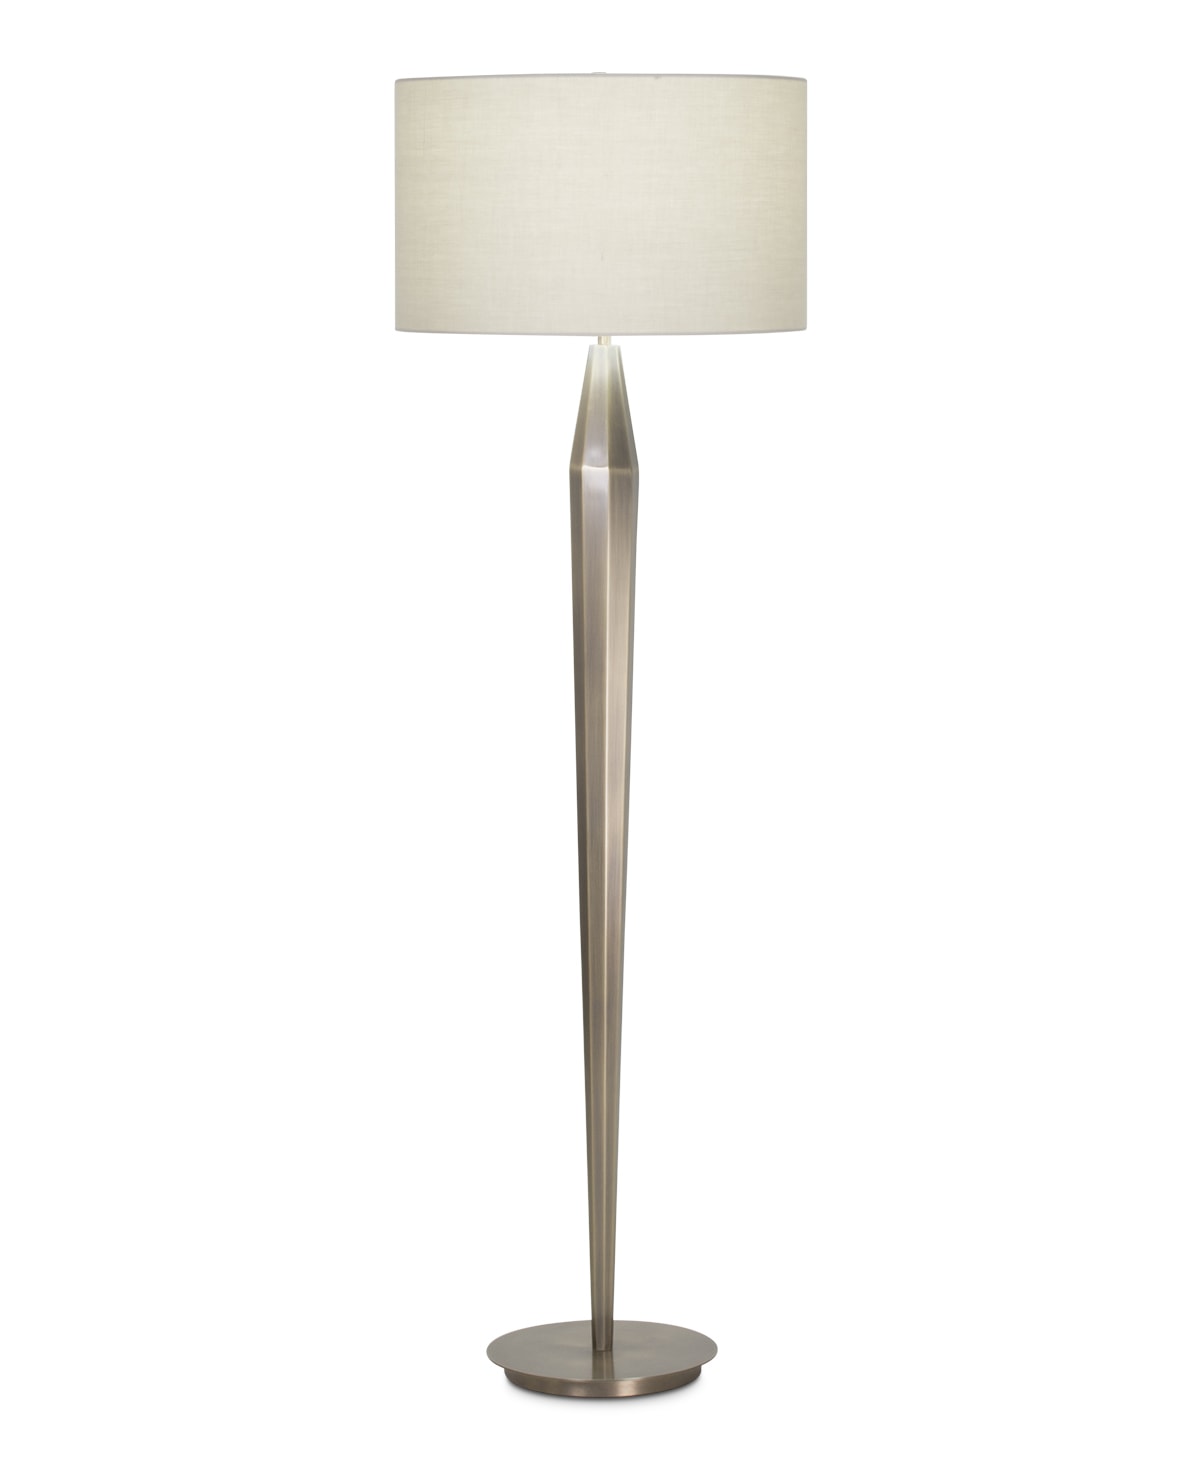 FlowDecor Landon Floor Lamp in metal with antique brass finish and beige cotton drum shade (# 3982)